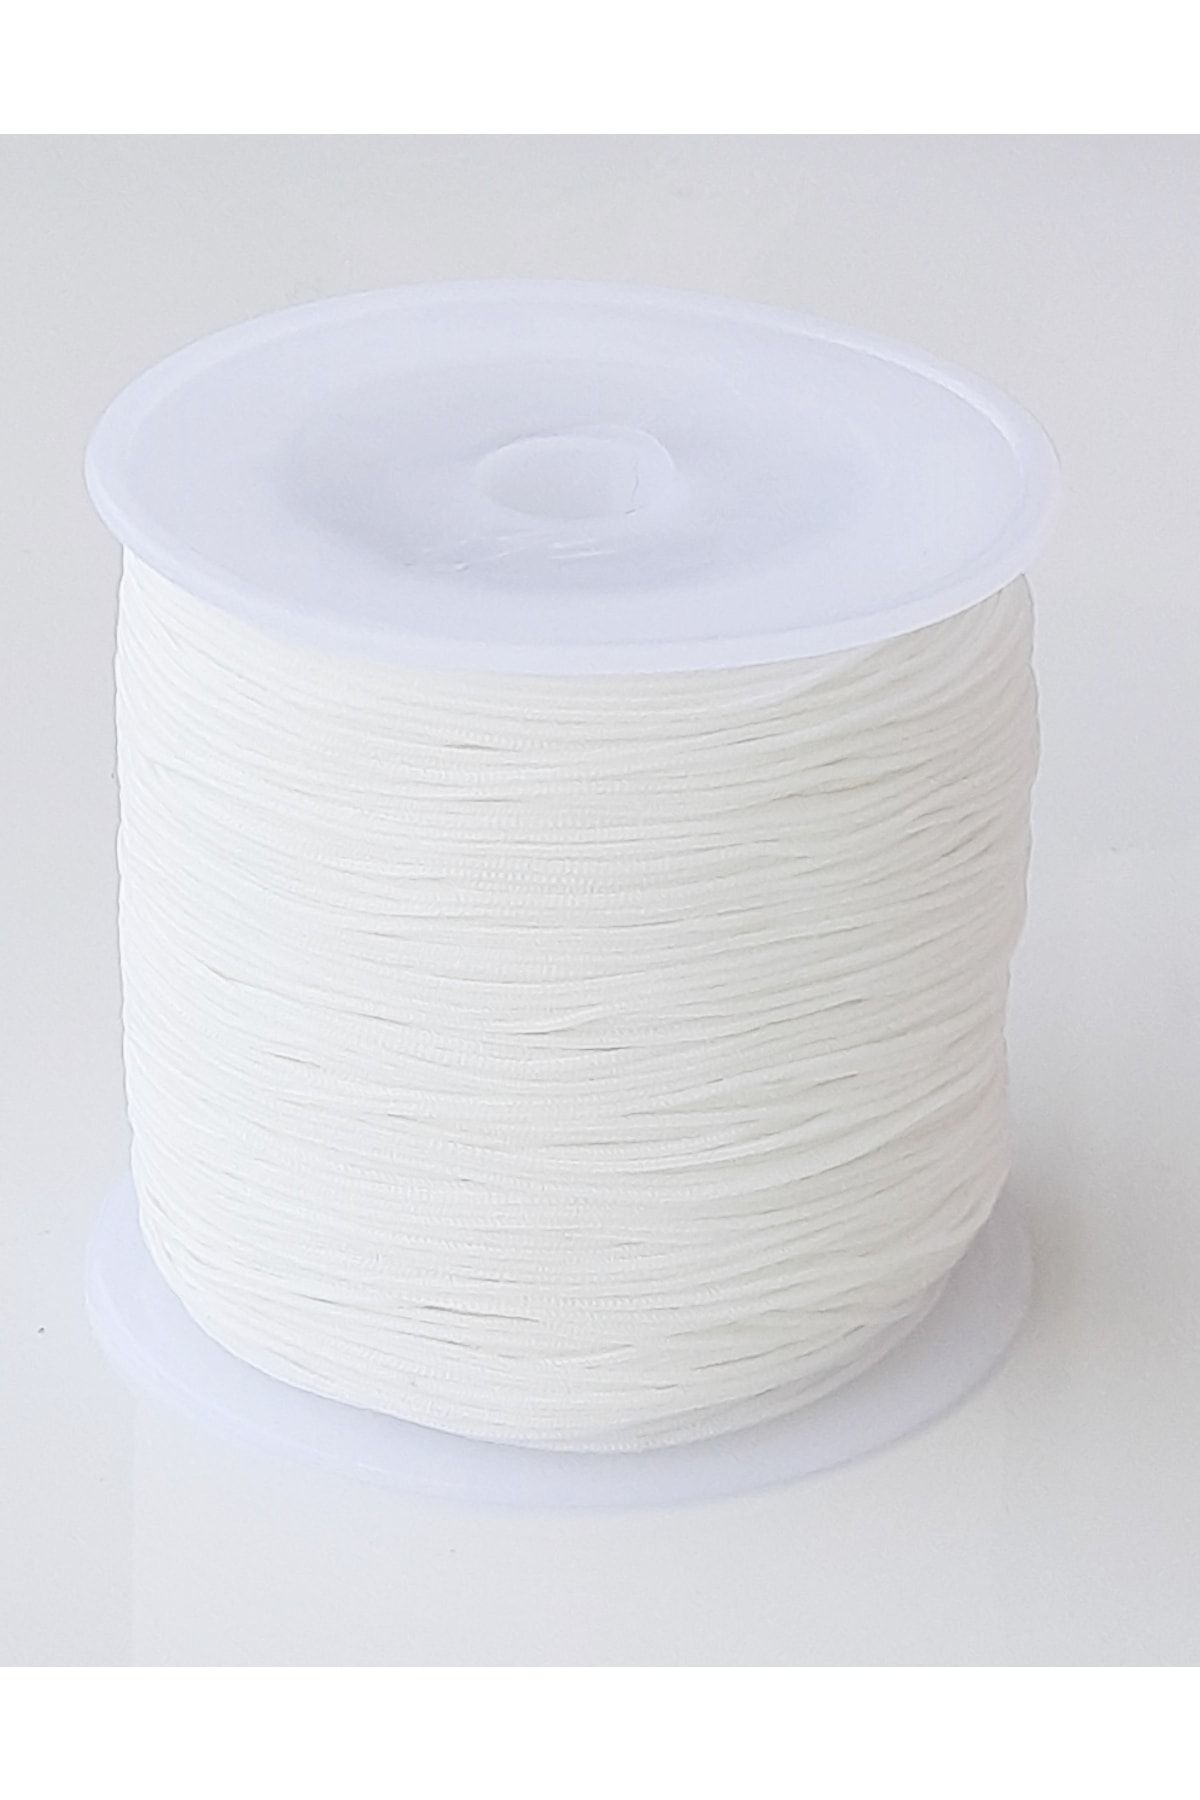 Kezban Tekstil Beyaz Renkli Paraşüt Ipi Bileklik Ipi 0,8 Mm 100 Metre